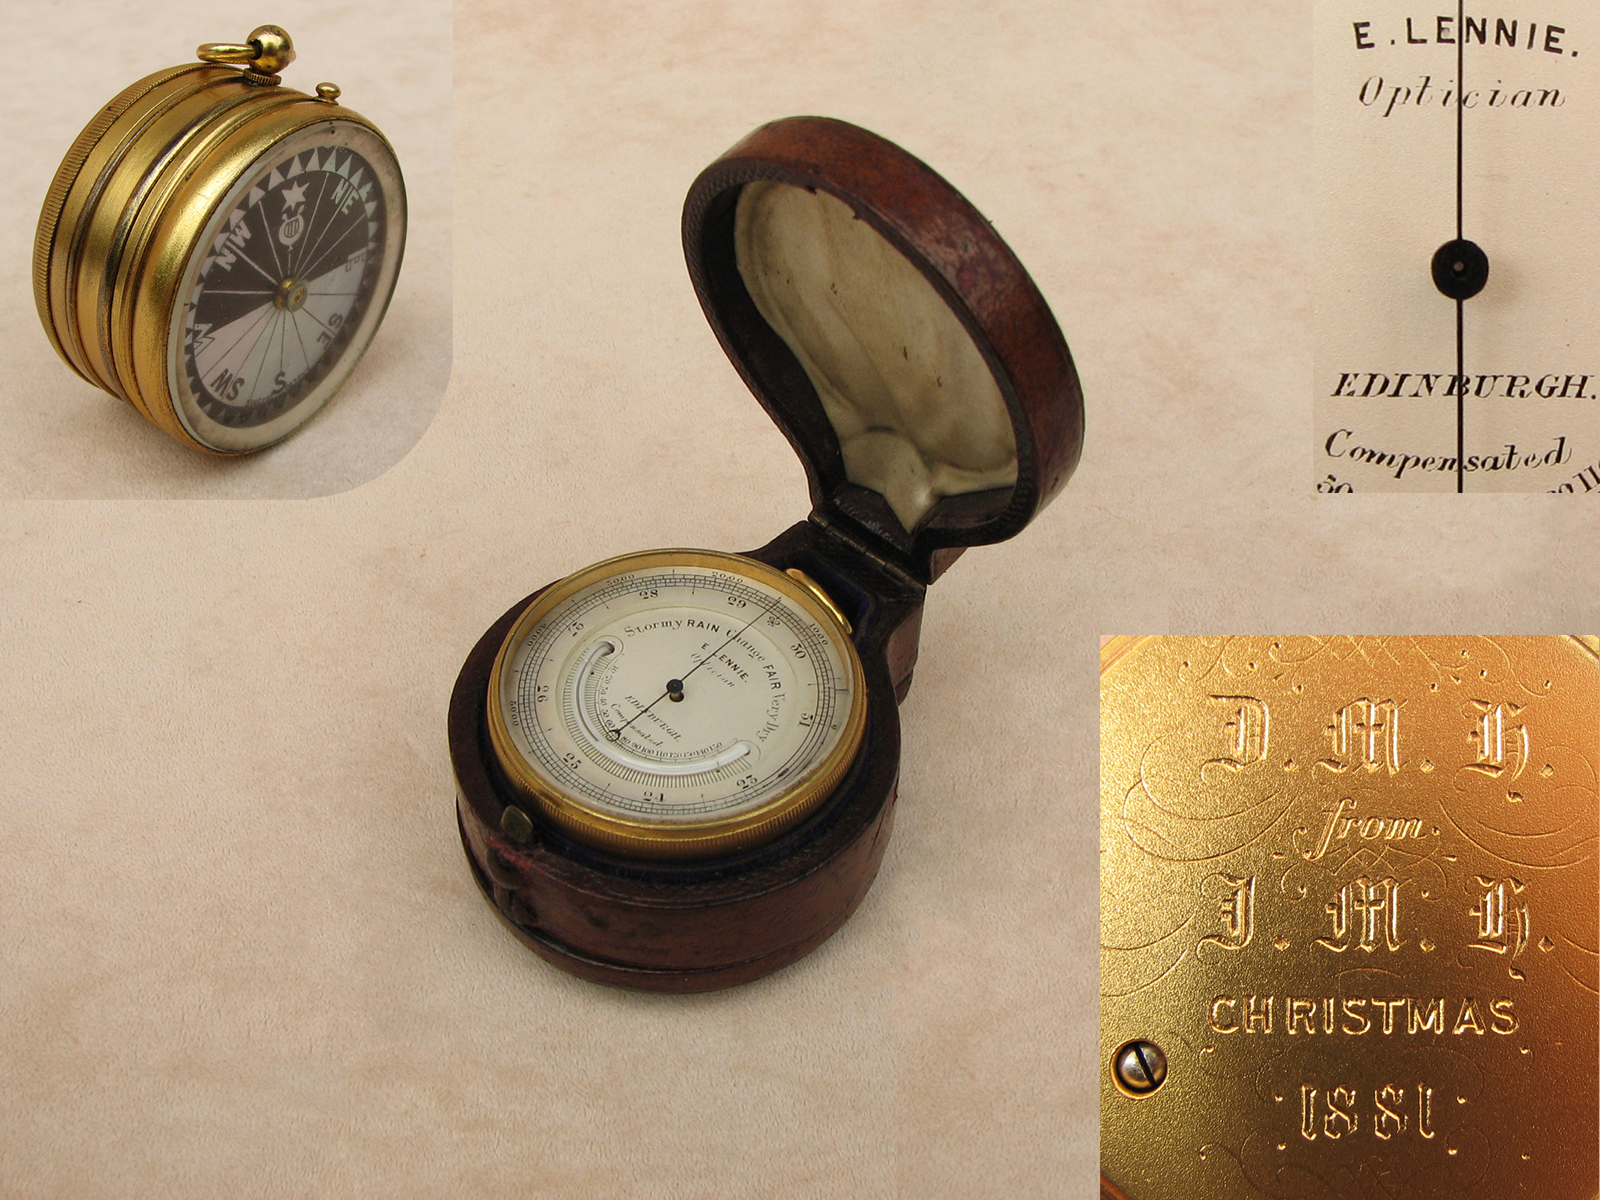 E. Lennie Victorian pocket barometer compendium, with Christmas 1881 inscription